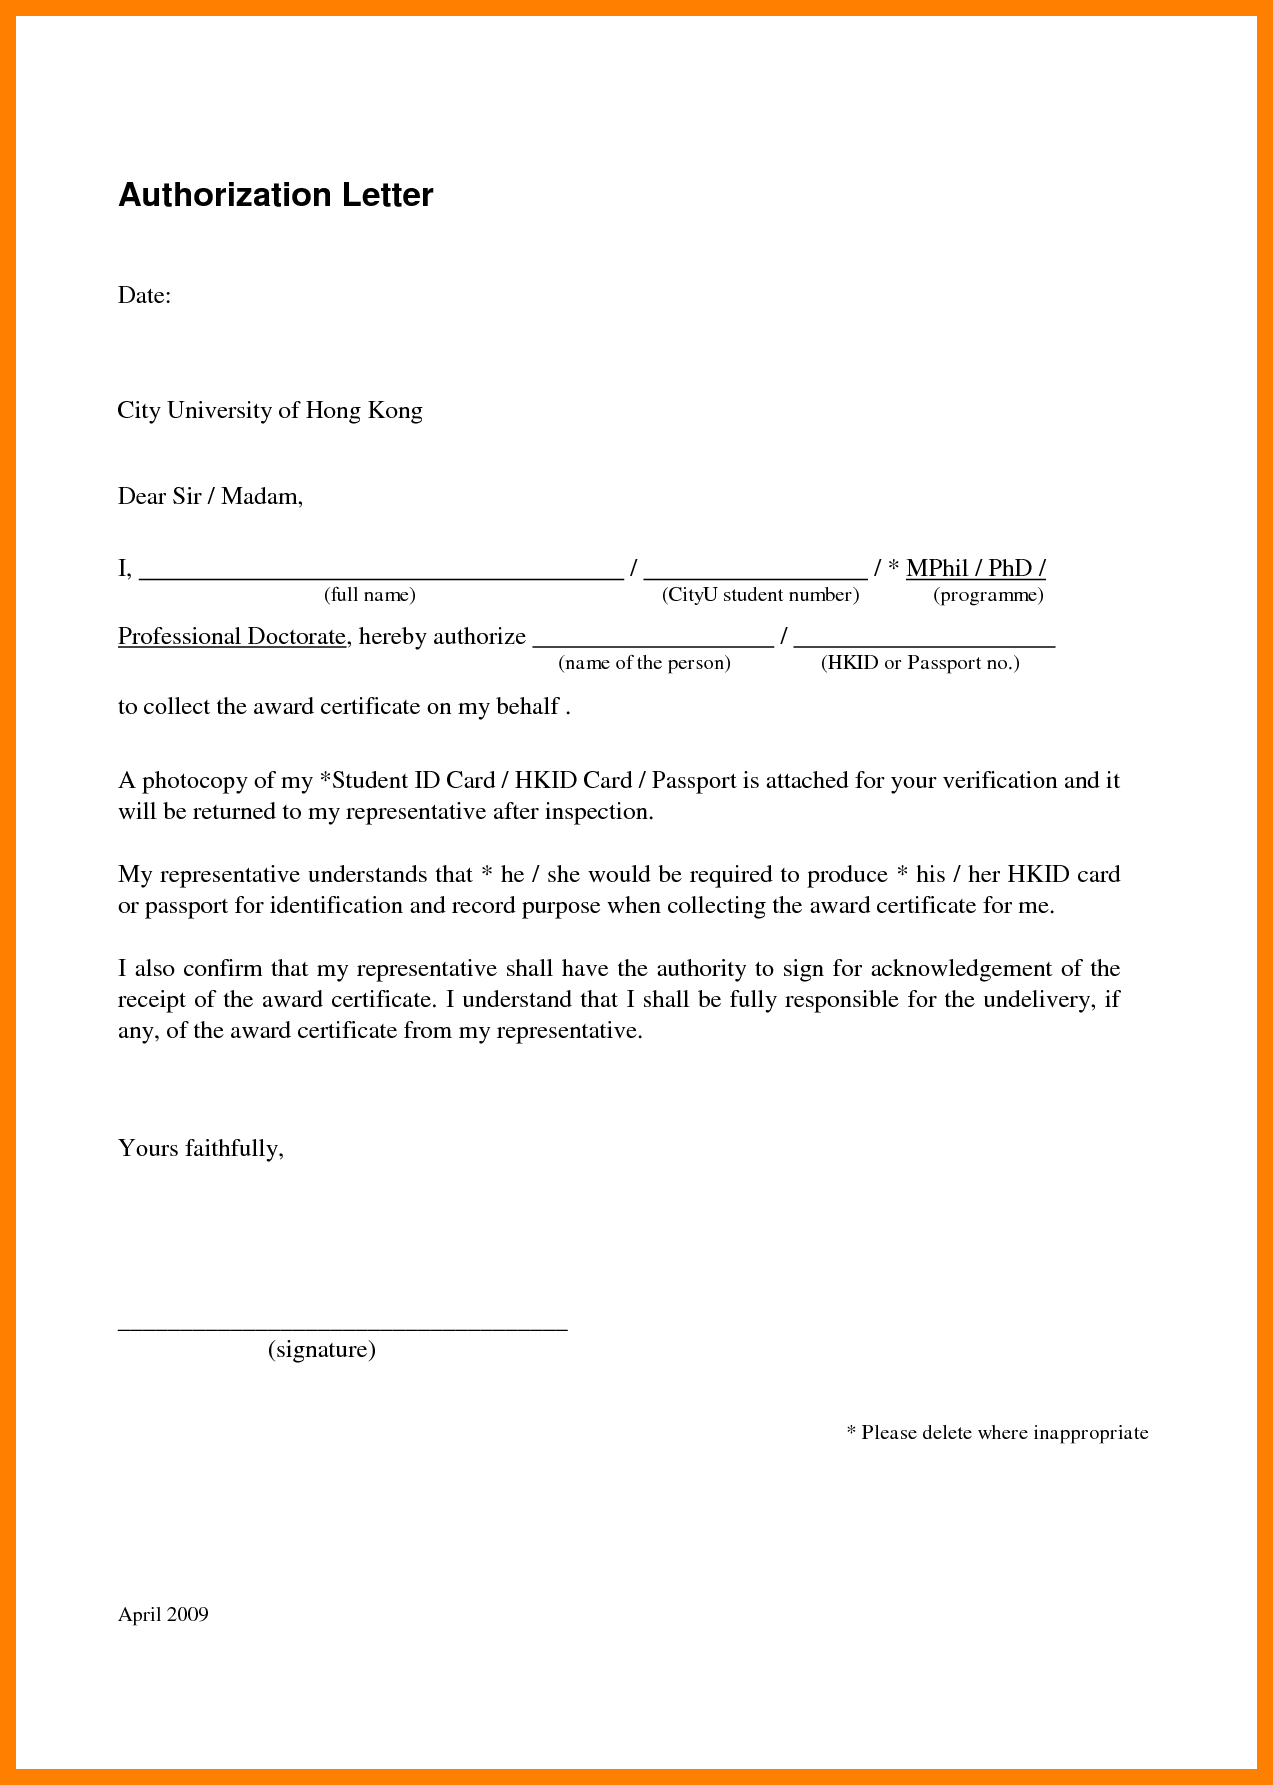 Letter application for renewal of